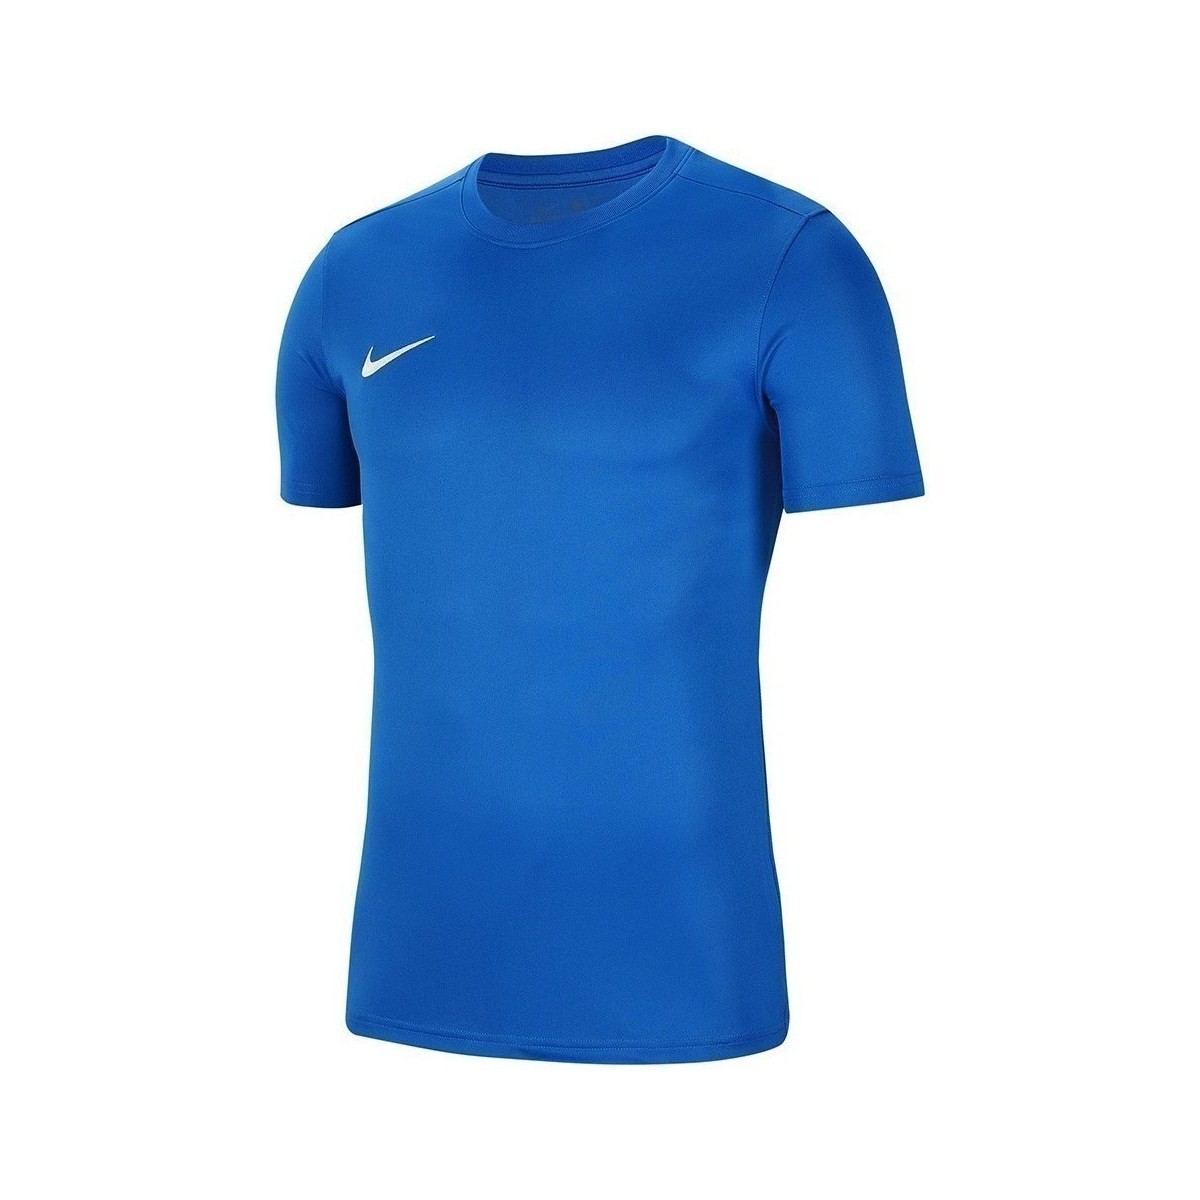 Textil Chlapecké Trička s krátkým rukávem Nike Dry Park Vii Jsy Modrá